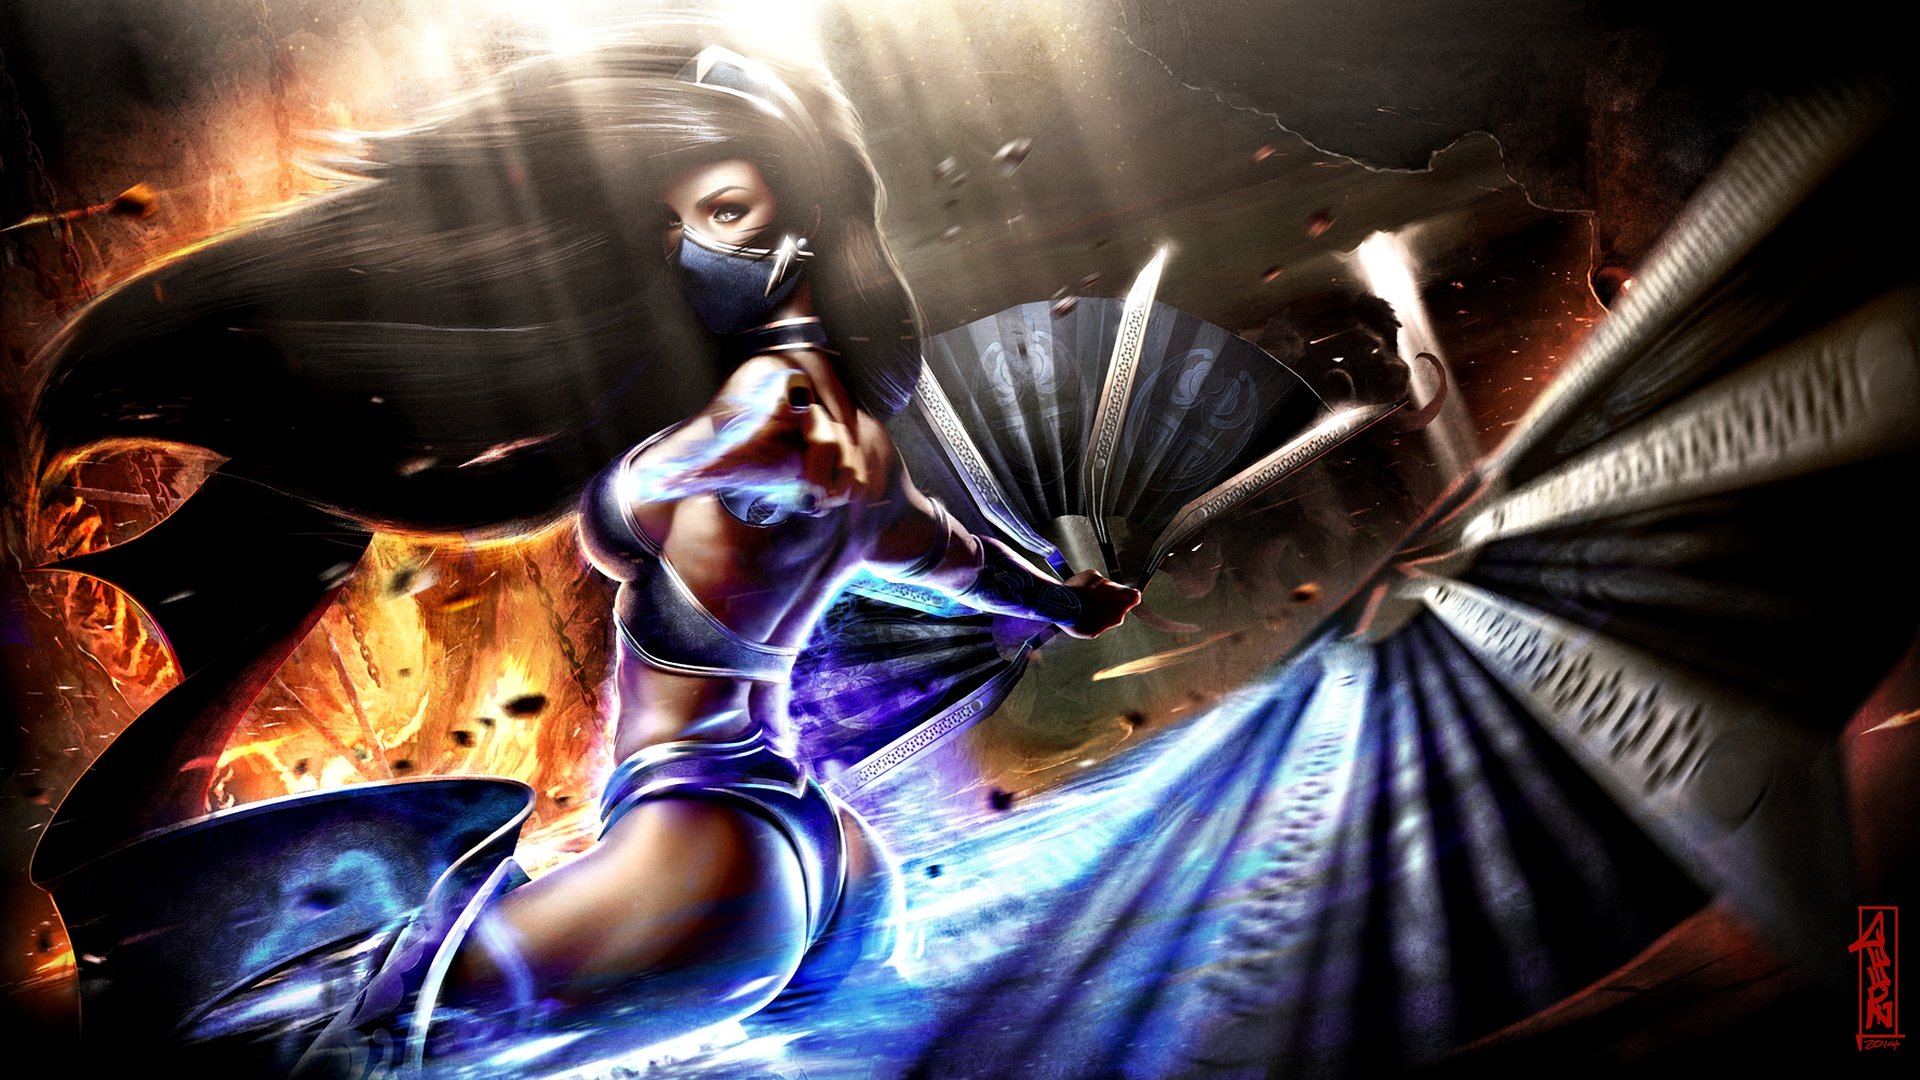 Mortal Kombat Kitana wallpaper by DynastyWarriorsJin on DeviantArt